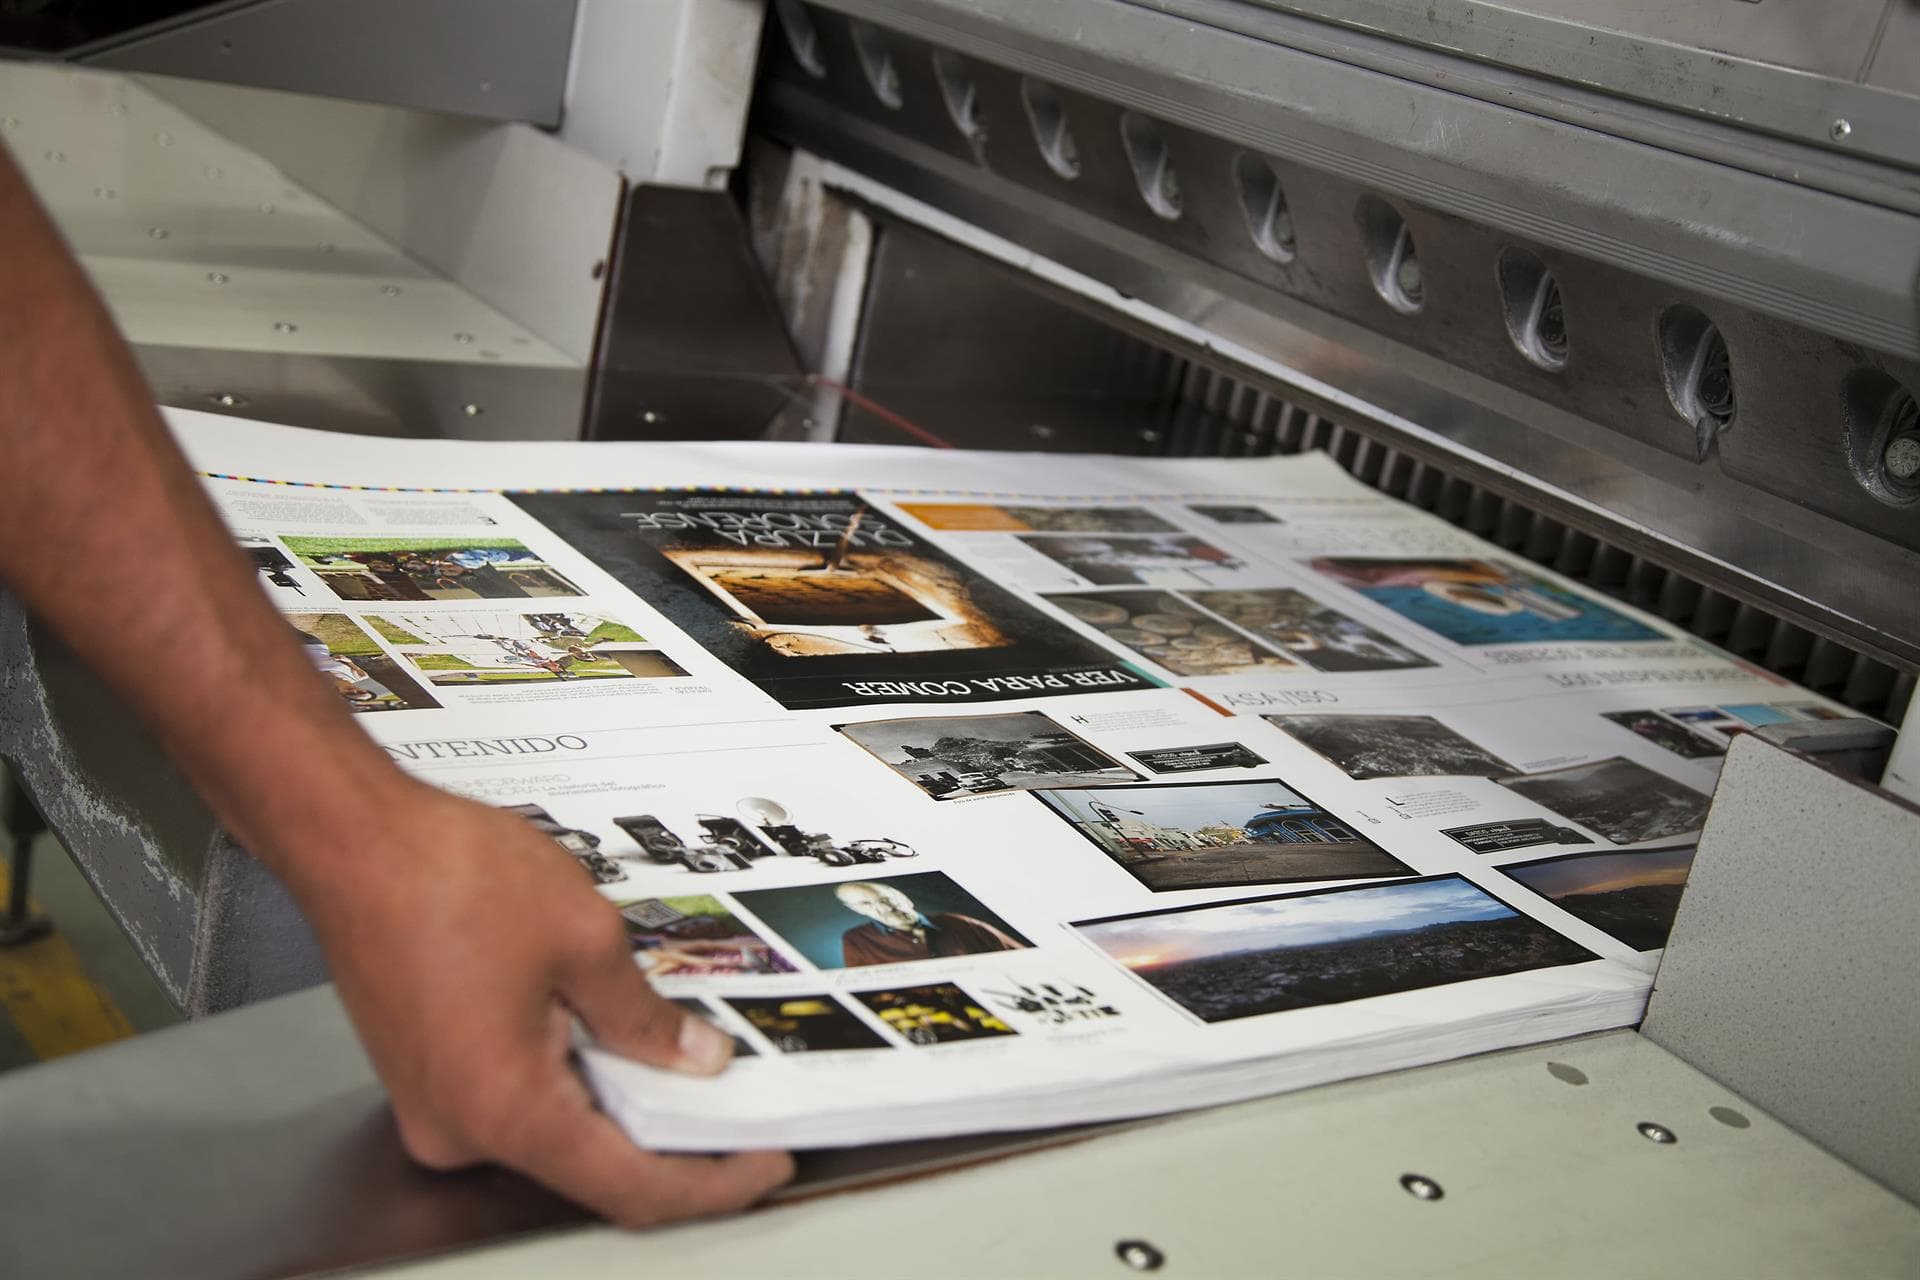 Librería Imprenta Fénix: impresión digital, ófset, tipografía y plotter